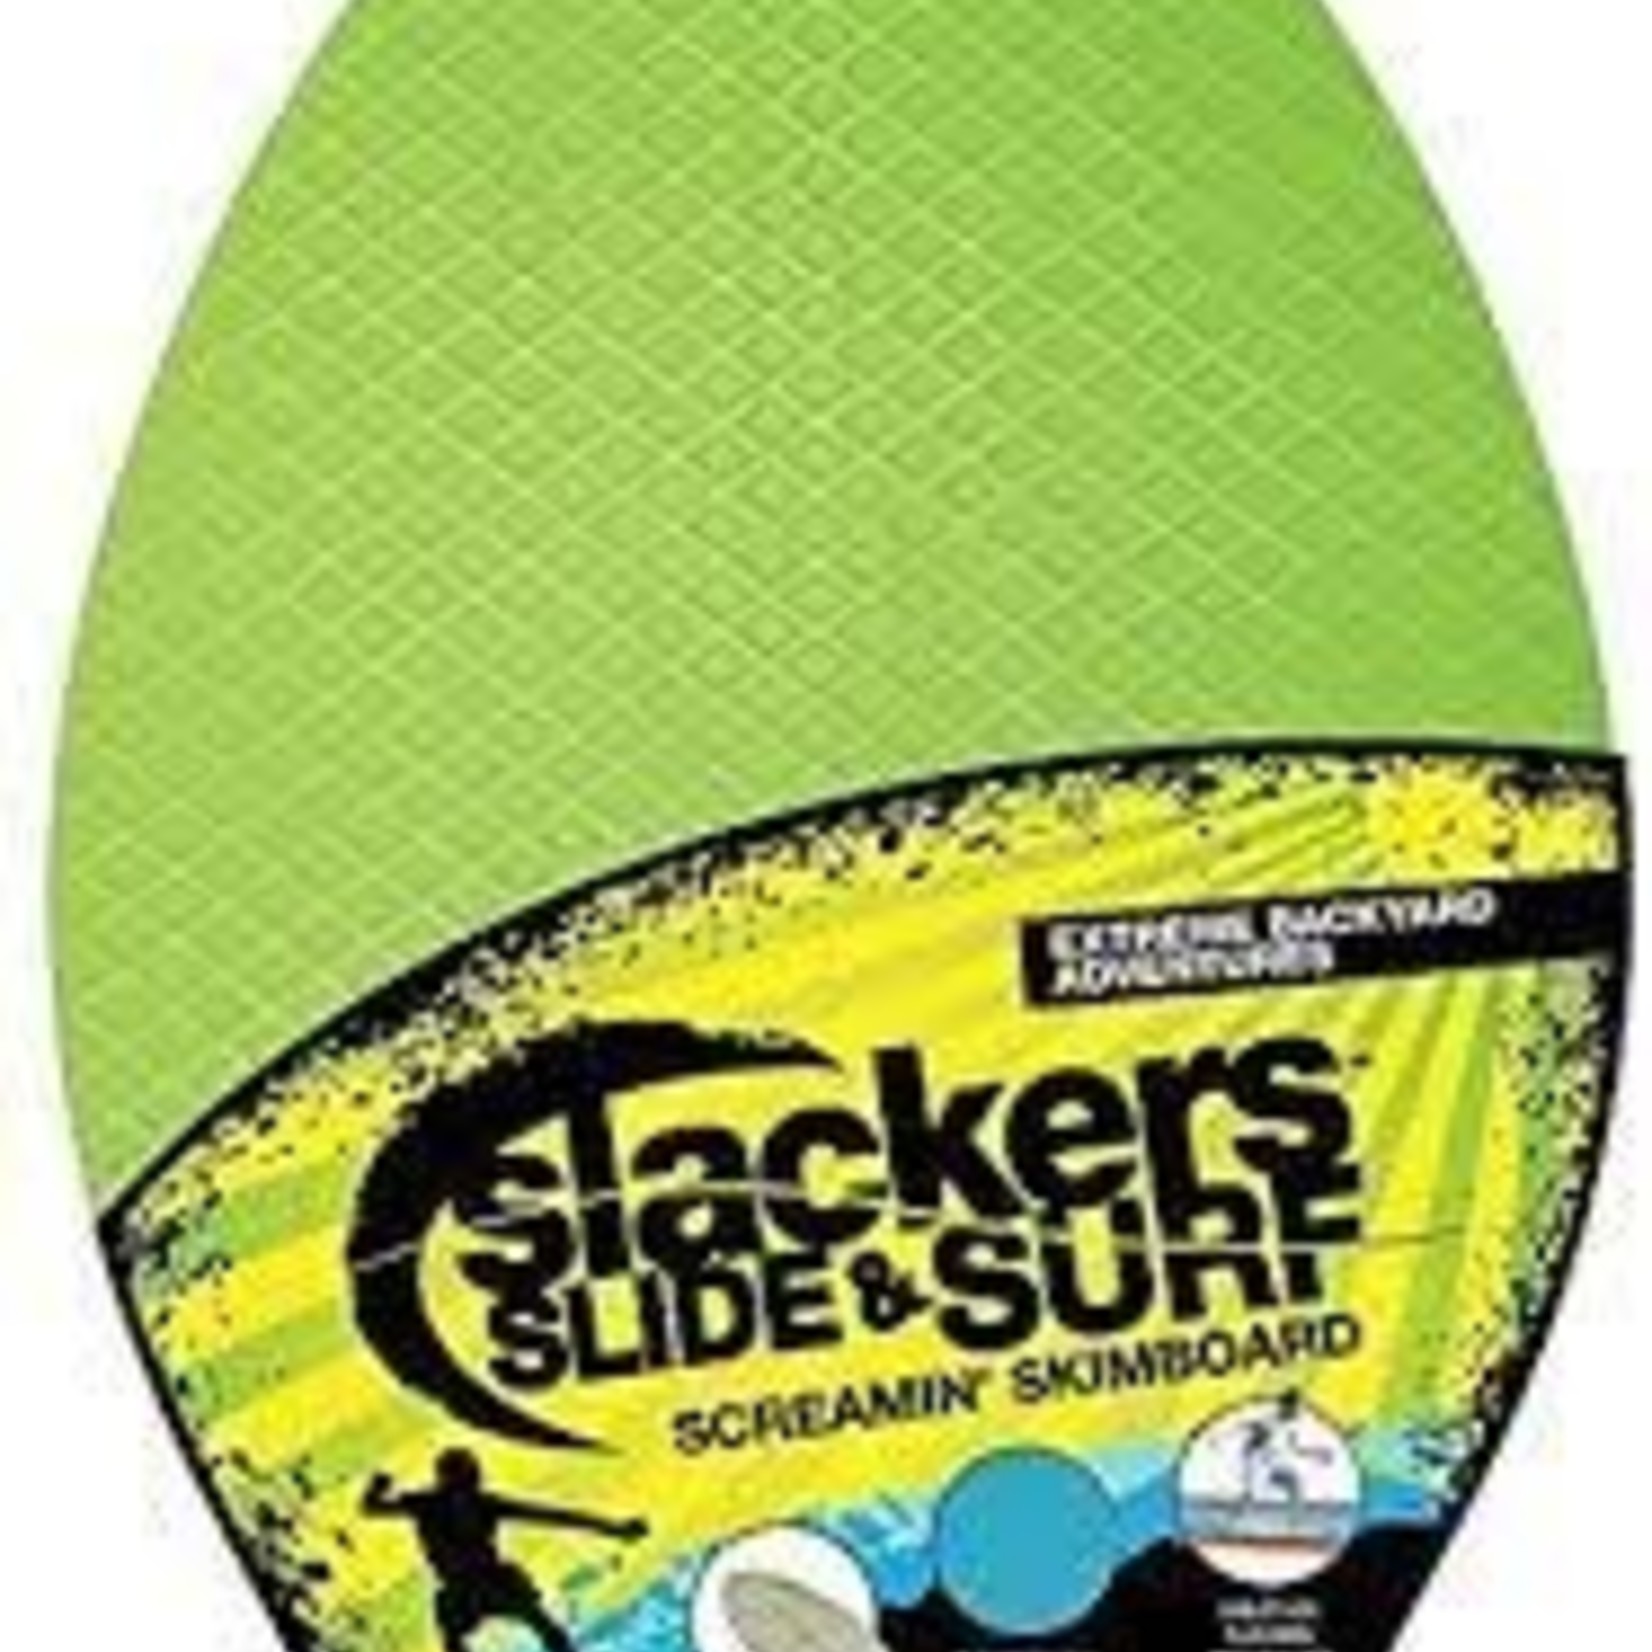 Slackers Slide & Surf Screamin' Skimboard